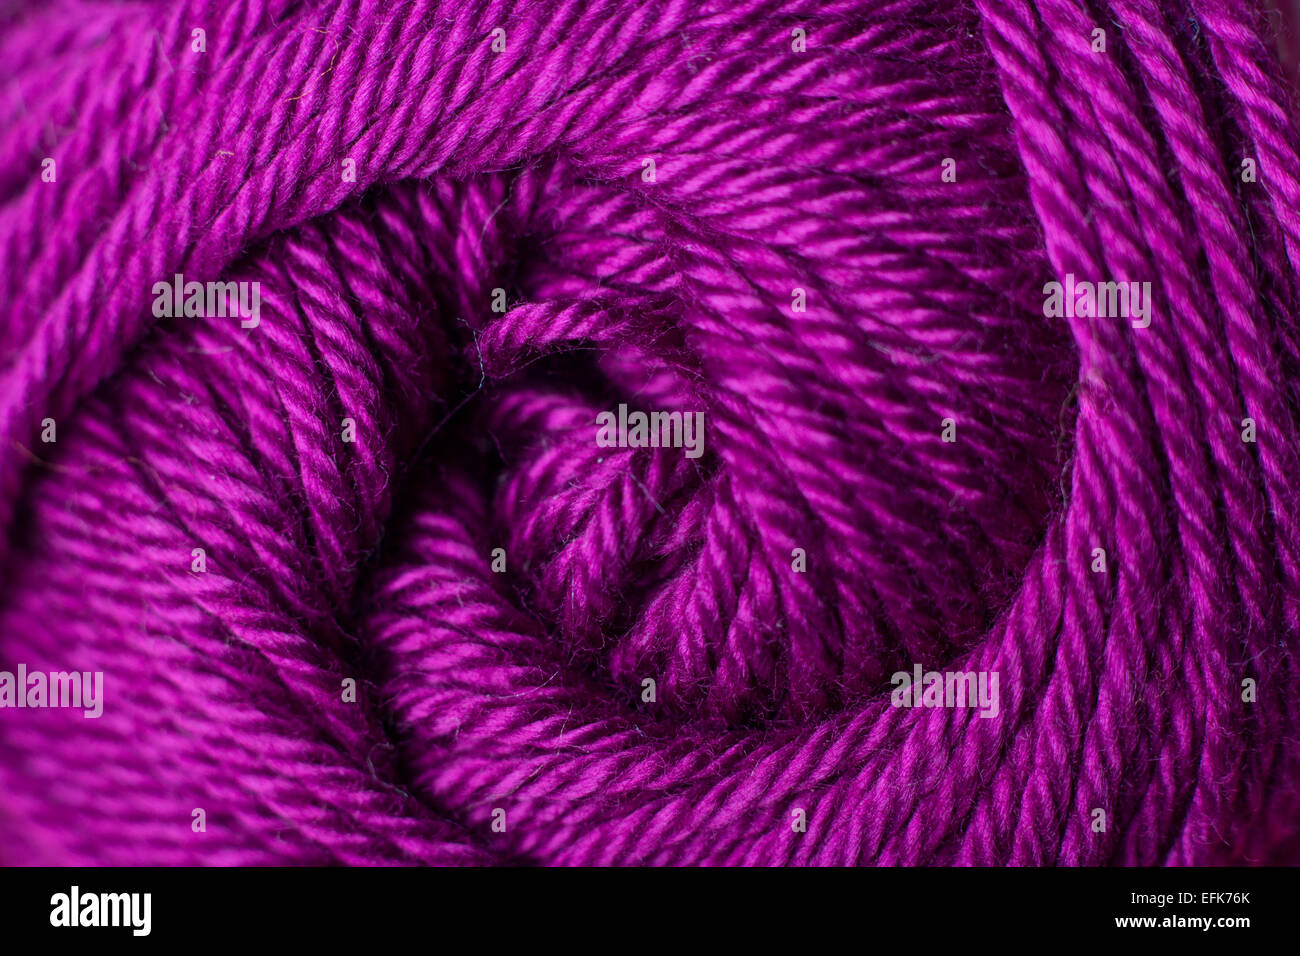 Single color yarn close up Stock Photo